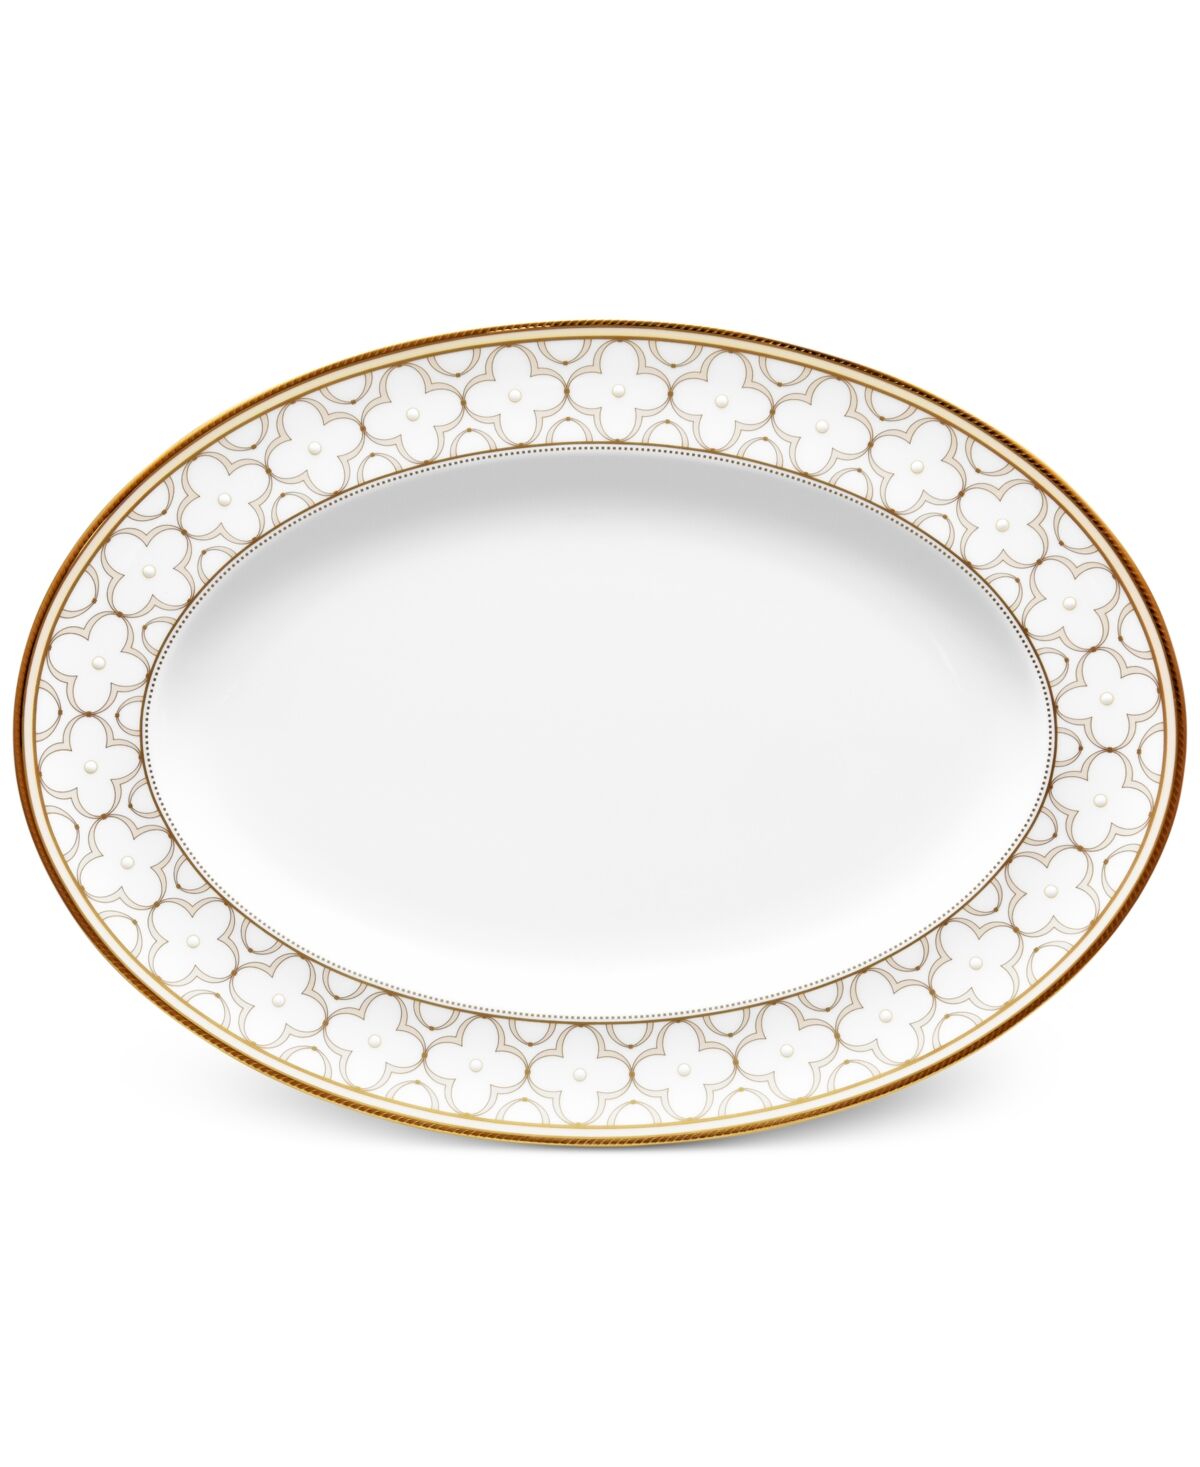 Noritake Trefolio Gold Dinnerware Collection Oval Platter - Class Gold